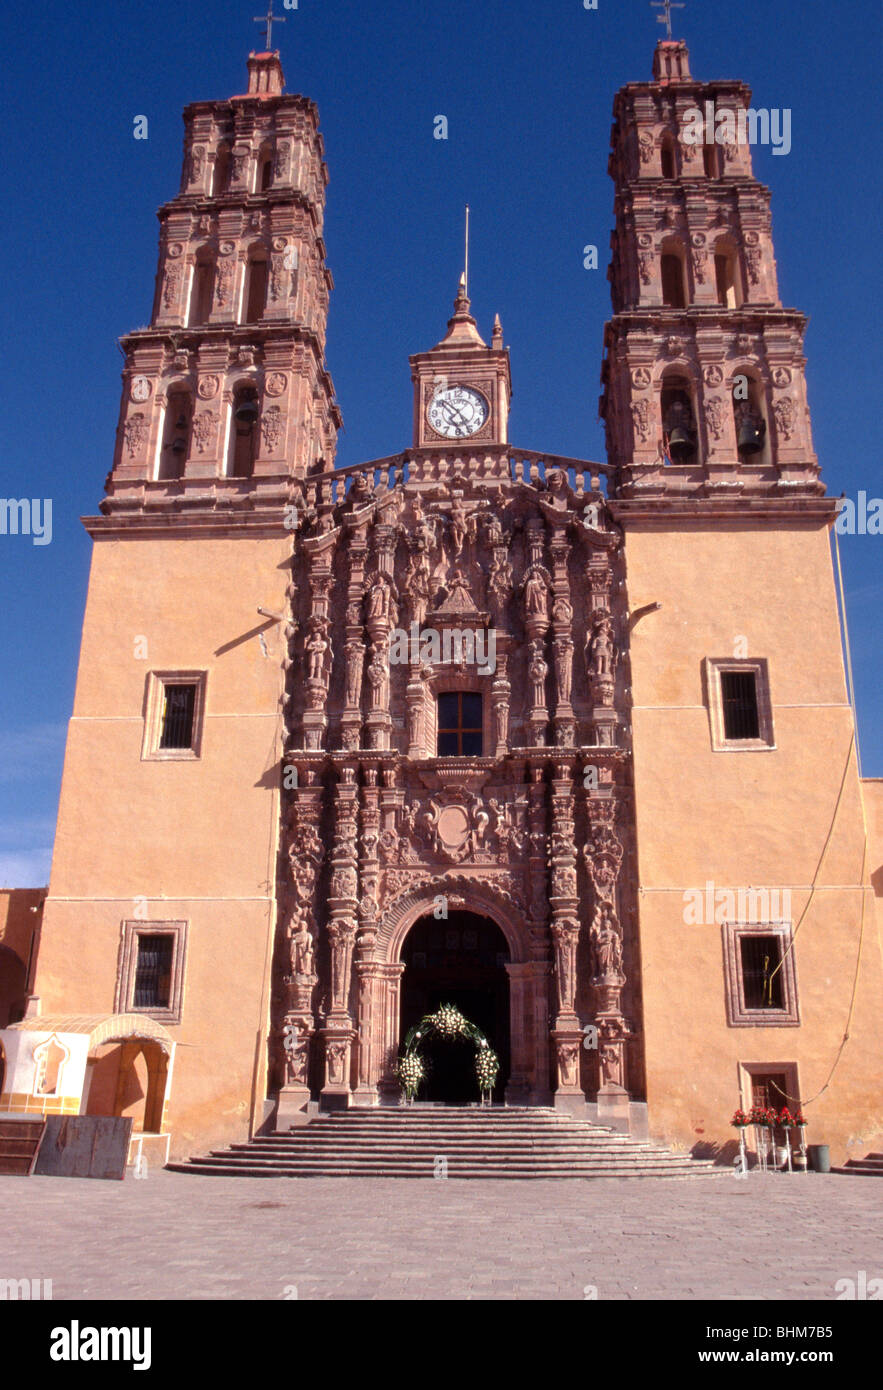 Steeples and Clock tower of the Parrish Church, Parroquia de Neustra Senora de Dolores, in Delores, Guanajuato, Mexico Stock Photo